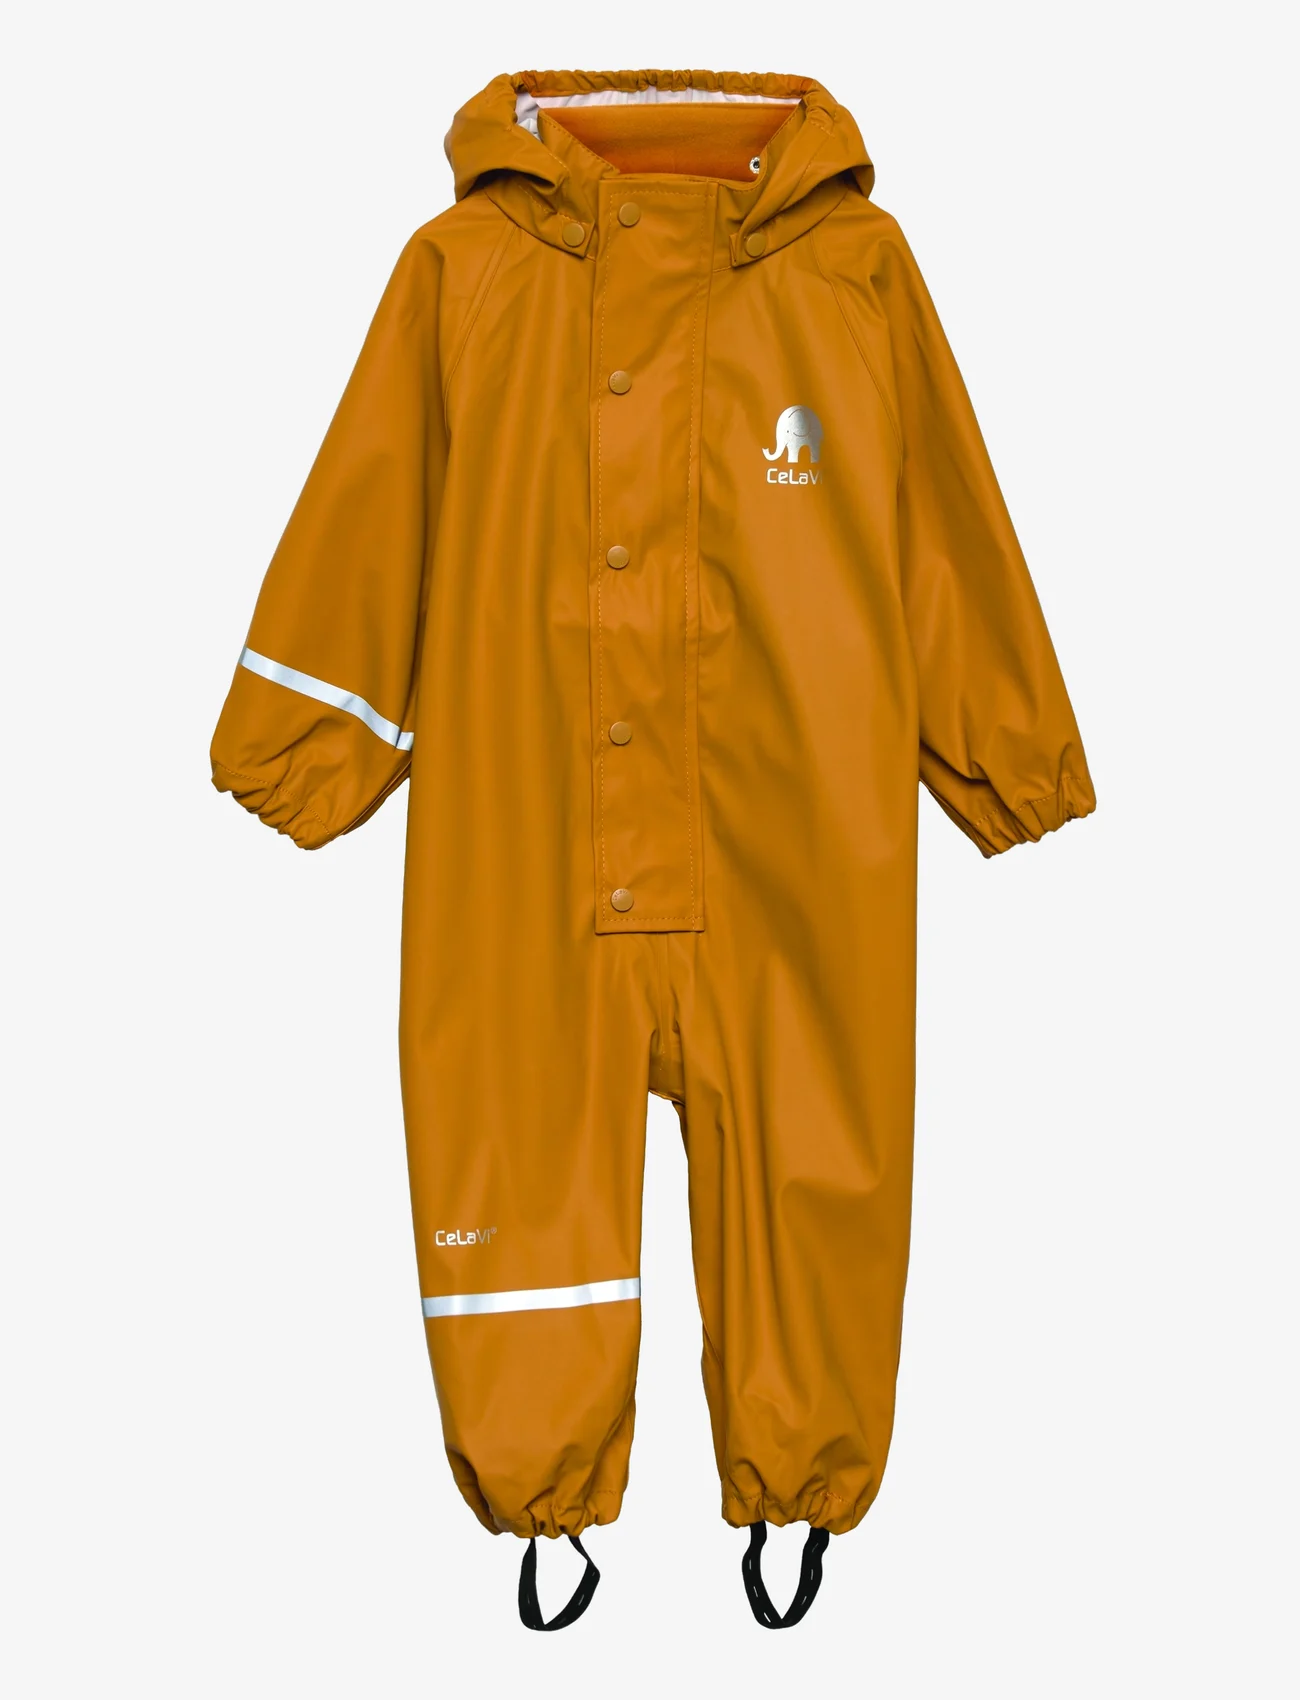 CeLaVi - Rainwear suit -Solid PU - lietus valkā kombinezoni - buckthorn brown - 0